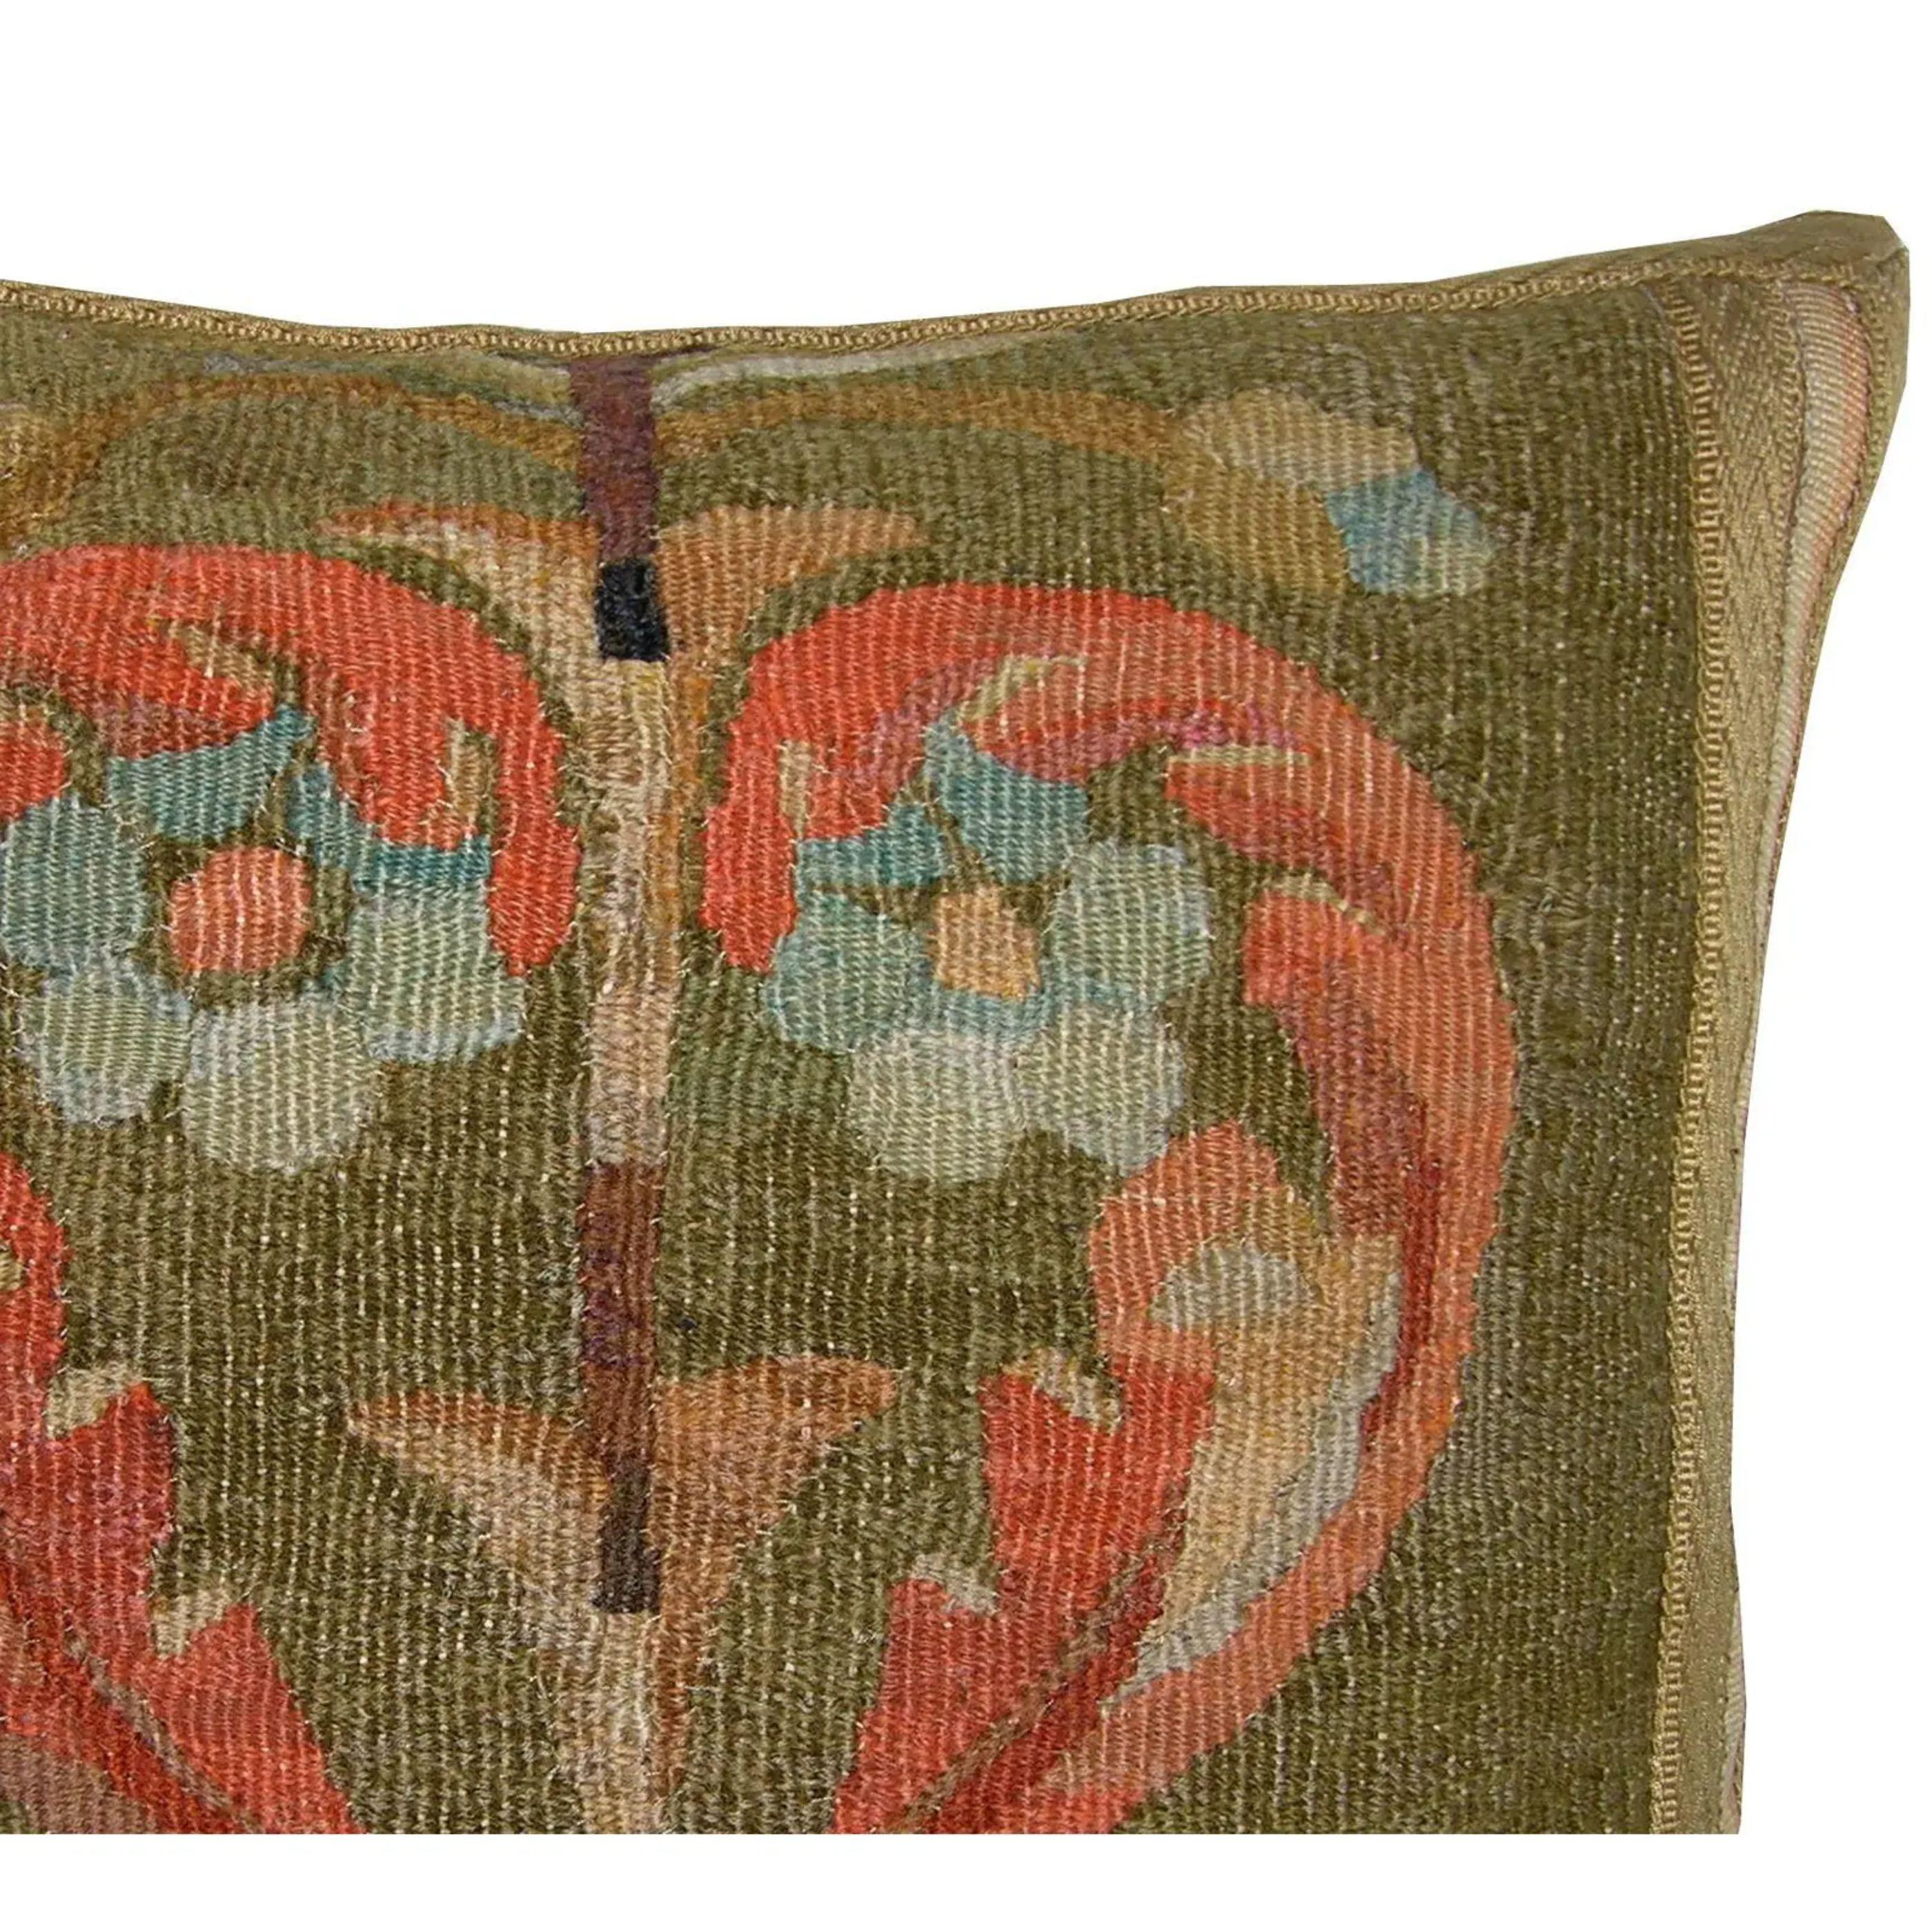 20'' X 17'' antique pillow. 19th-century fabric.